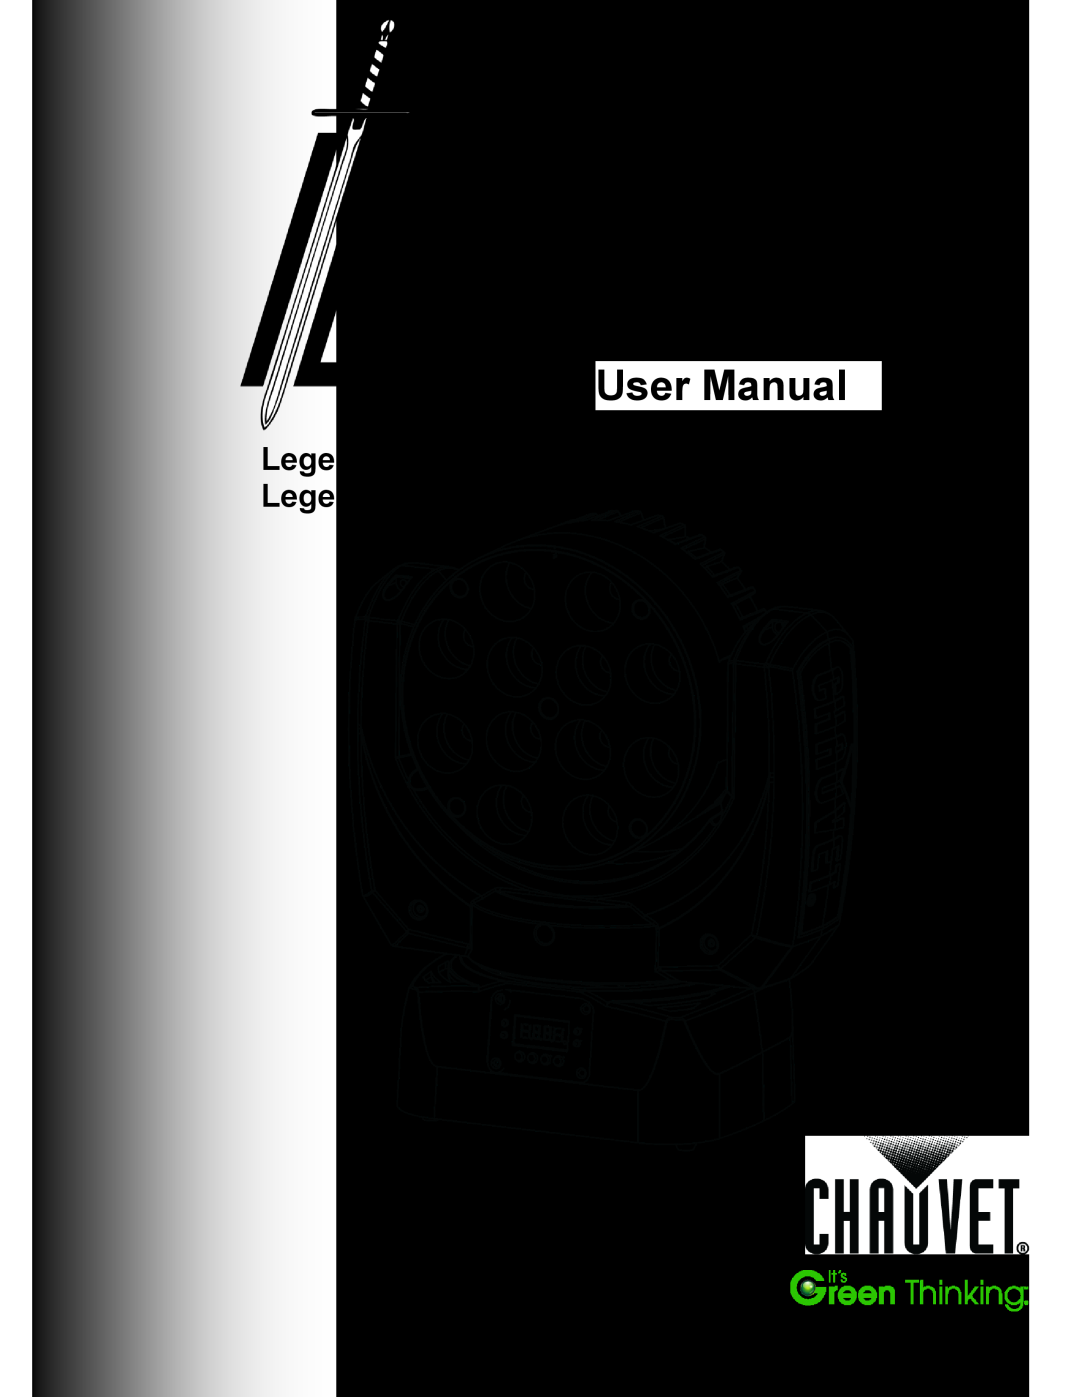 Chauvet 412VW user manual Legend 412 VW, User Manual 